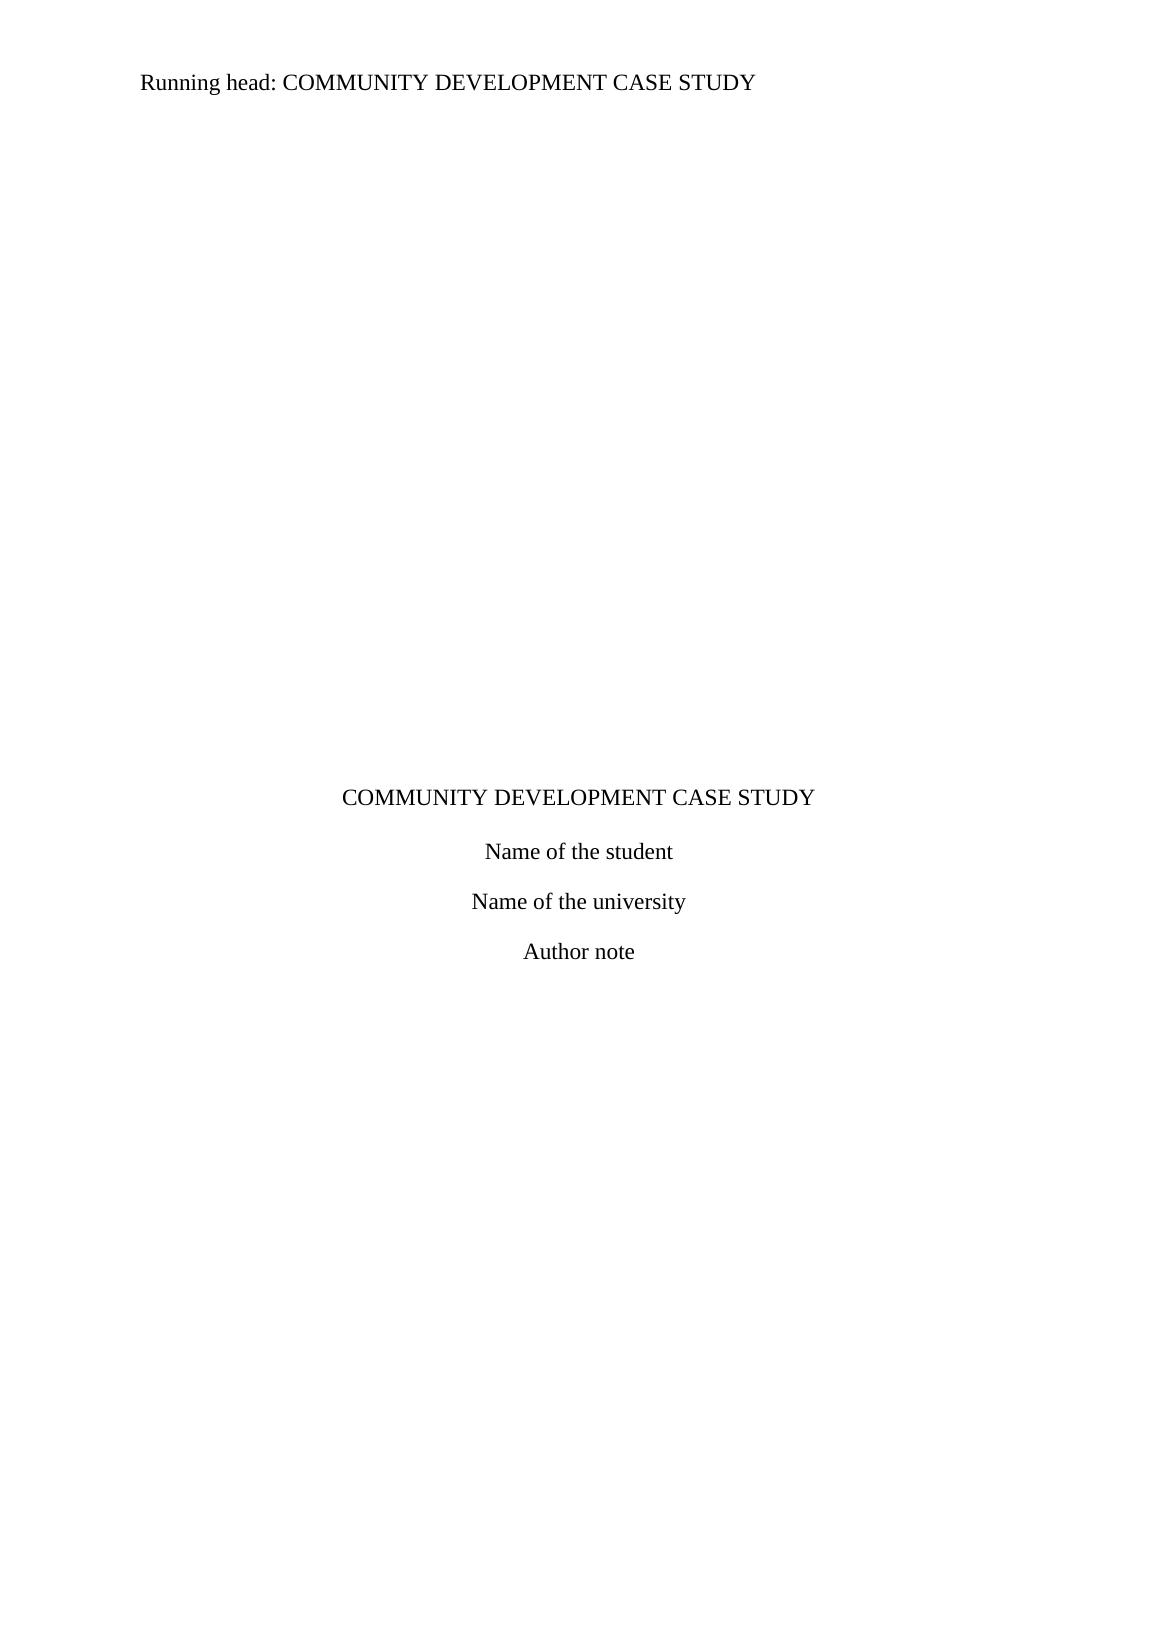 Community Development Case Study_1